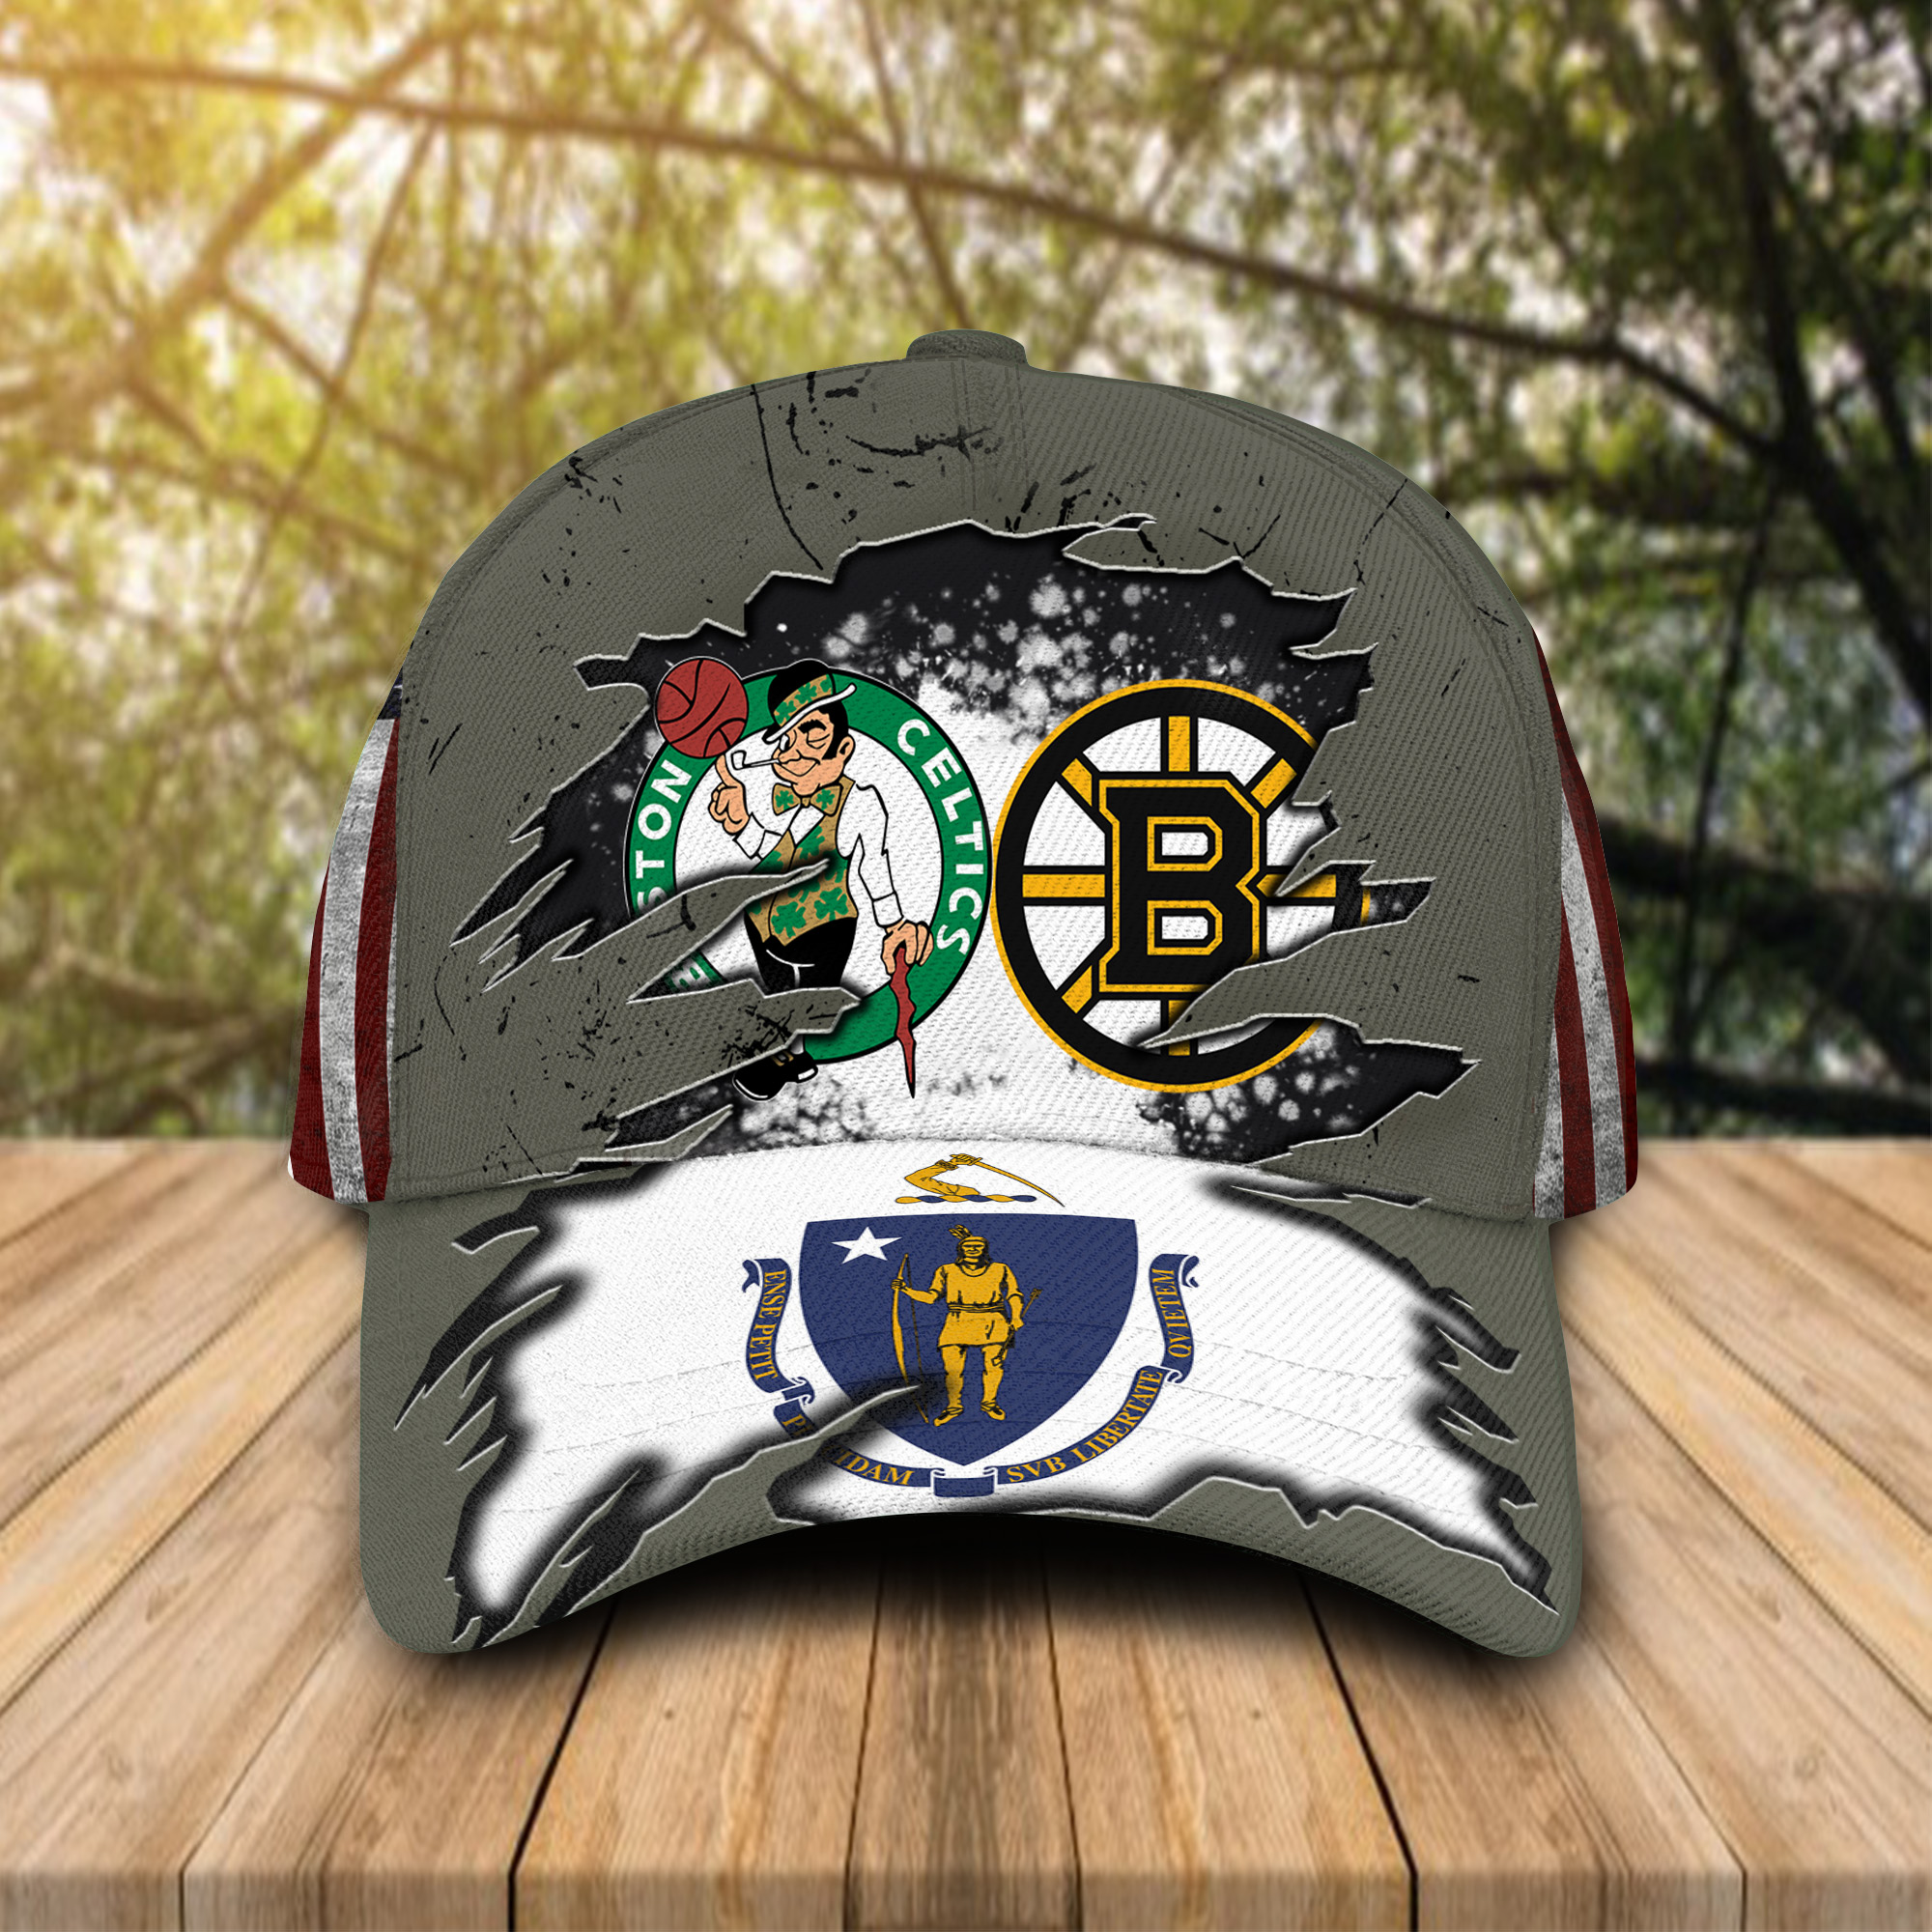 Boston Celtics And Boston Bruins Caps & Hats – Hothot 121021